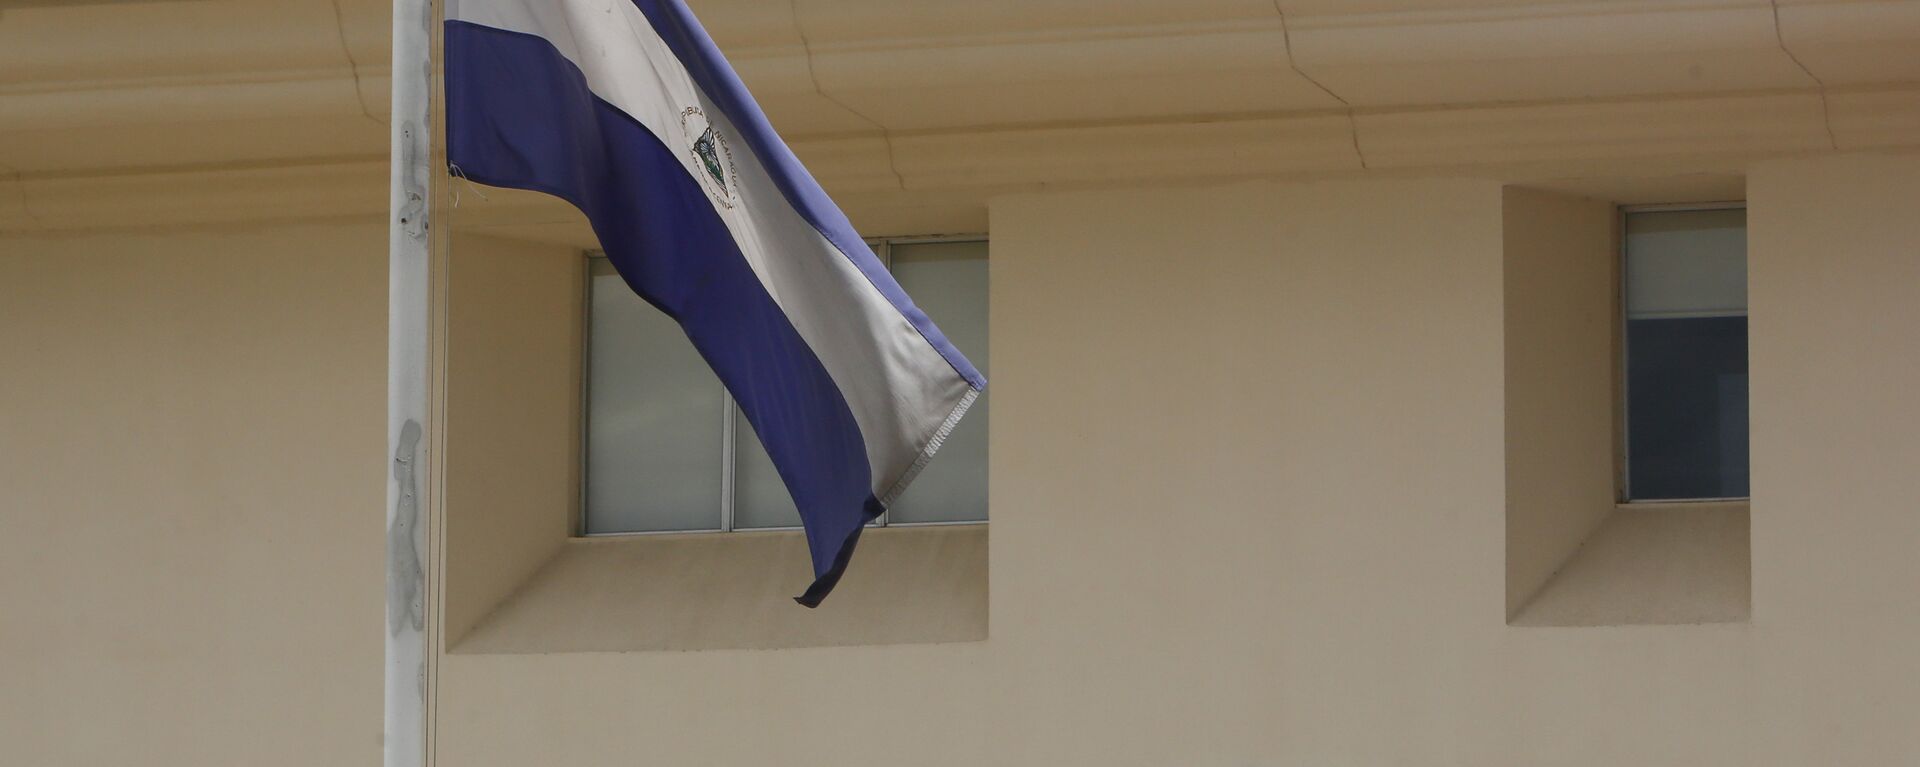 Bandera de Nicaragua - Sputnik Mundo, 1920, 21.09.2021